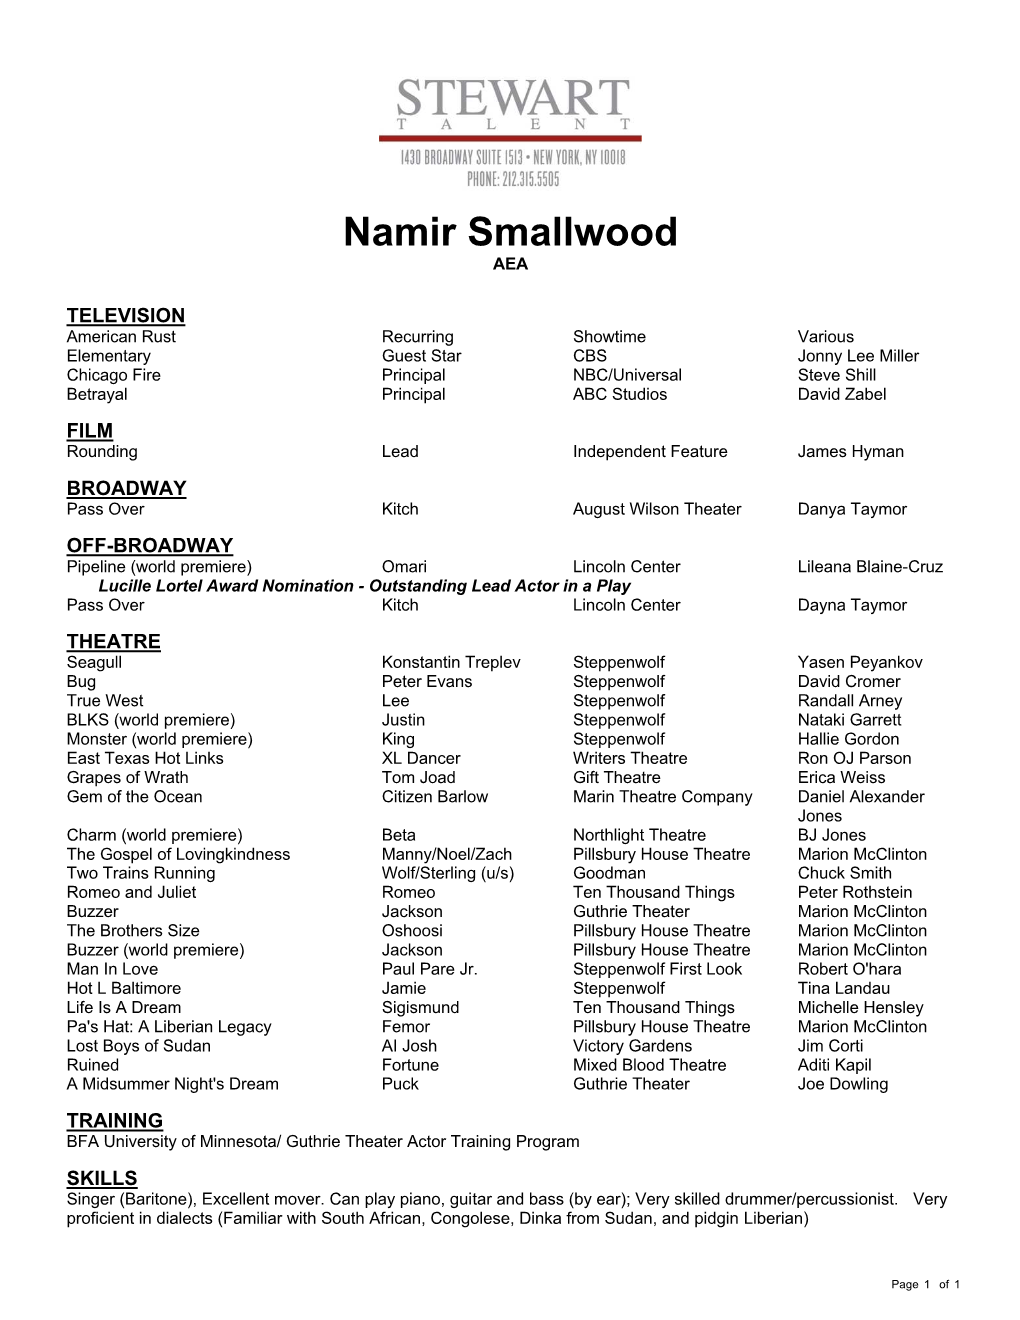 Namir Smallwood Theatrical Resume